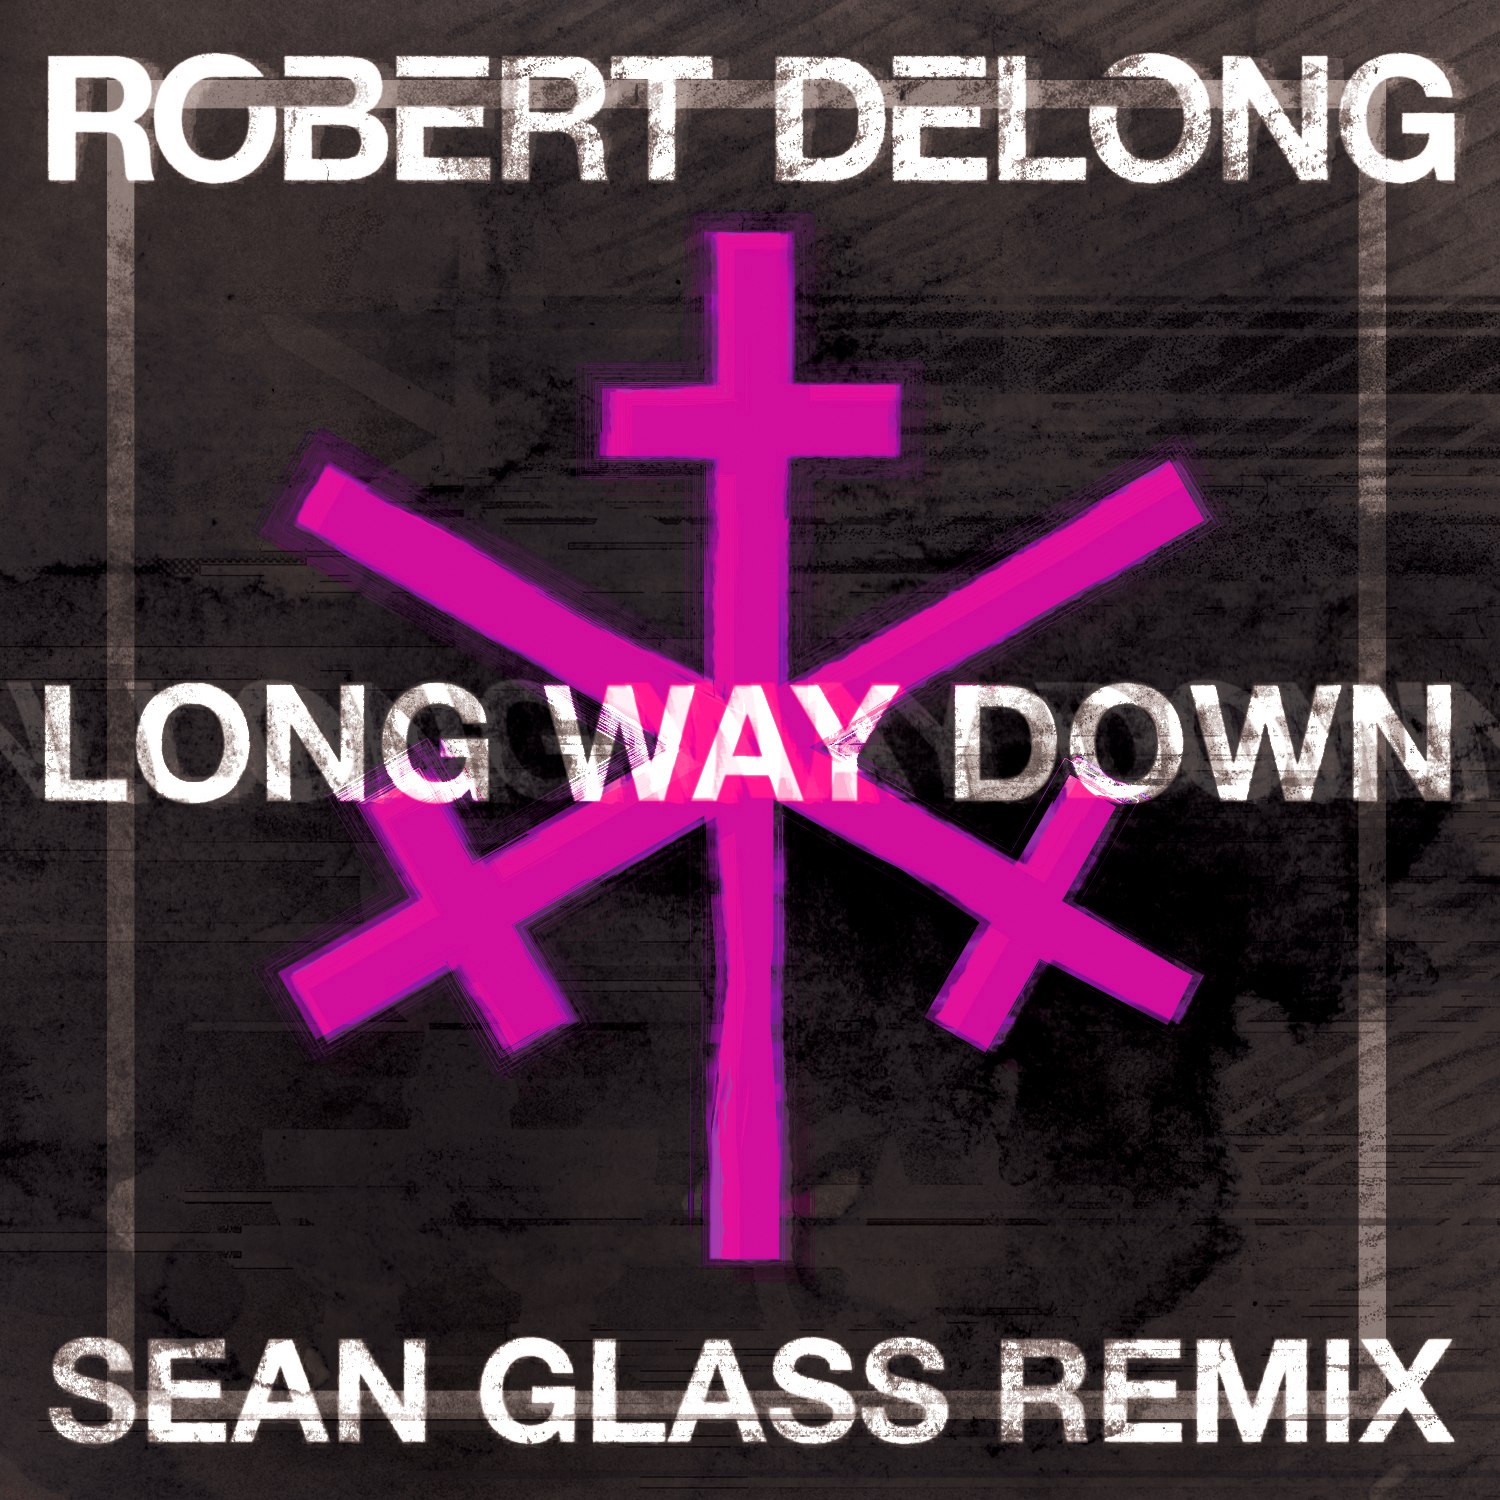 Robert Delong Long Way Down Sean Glass remix artwork